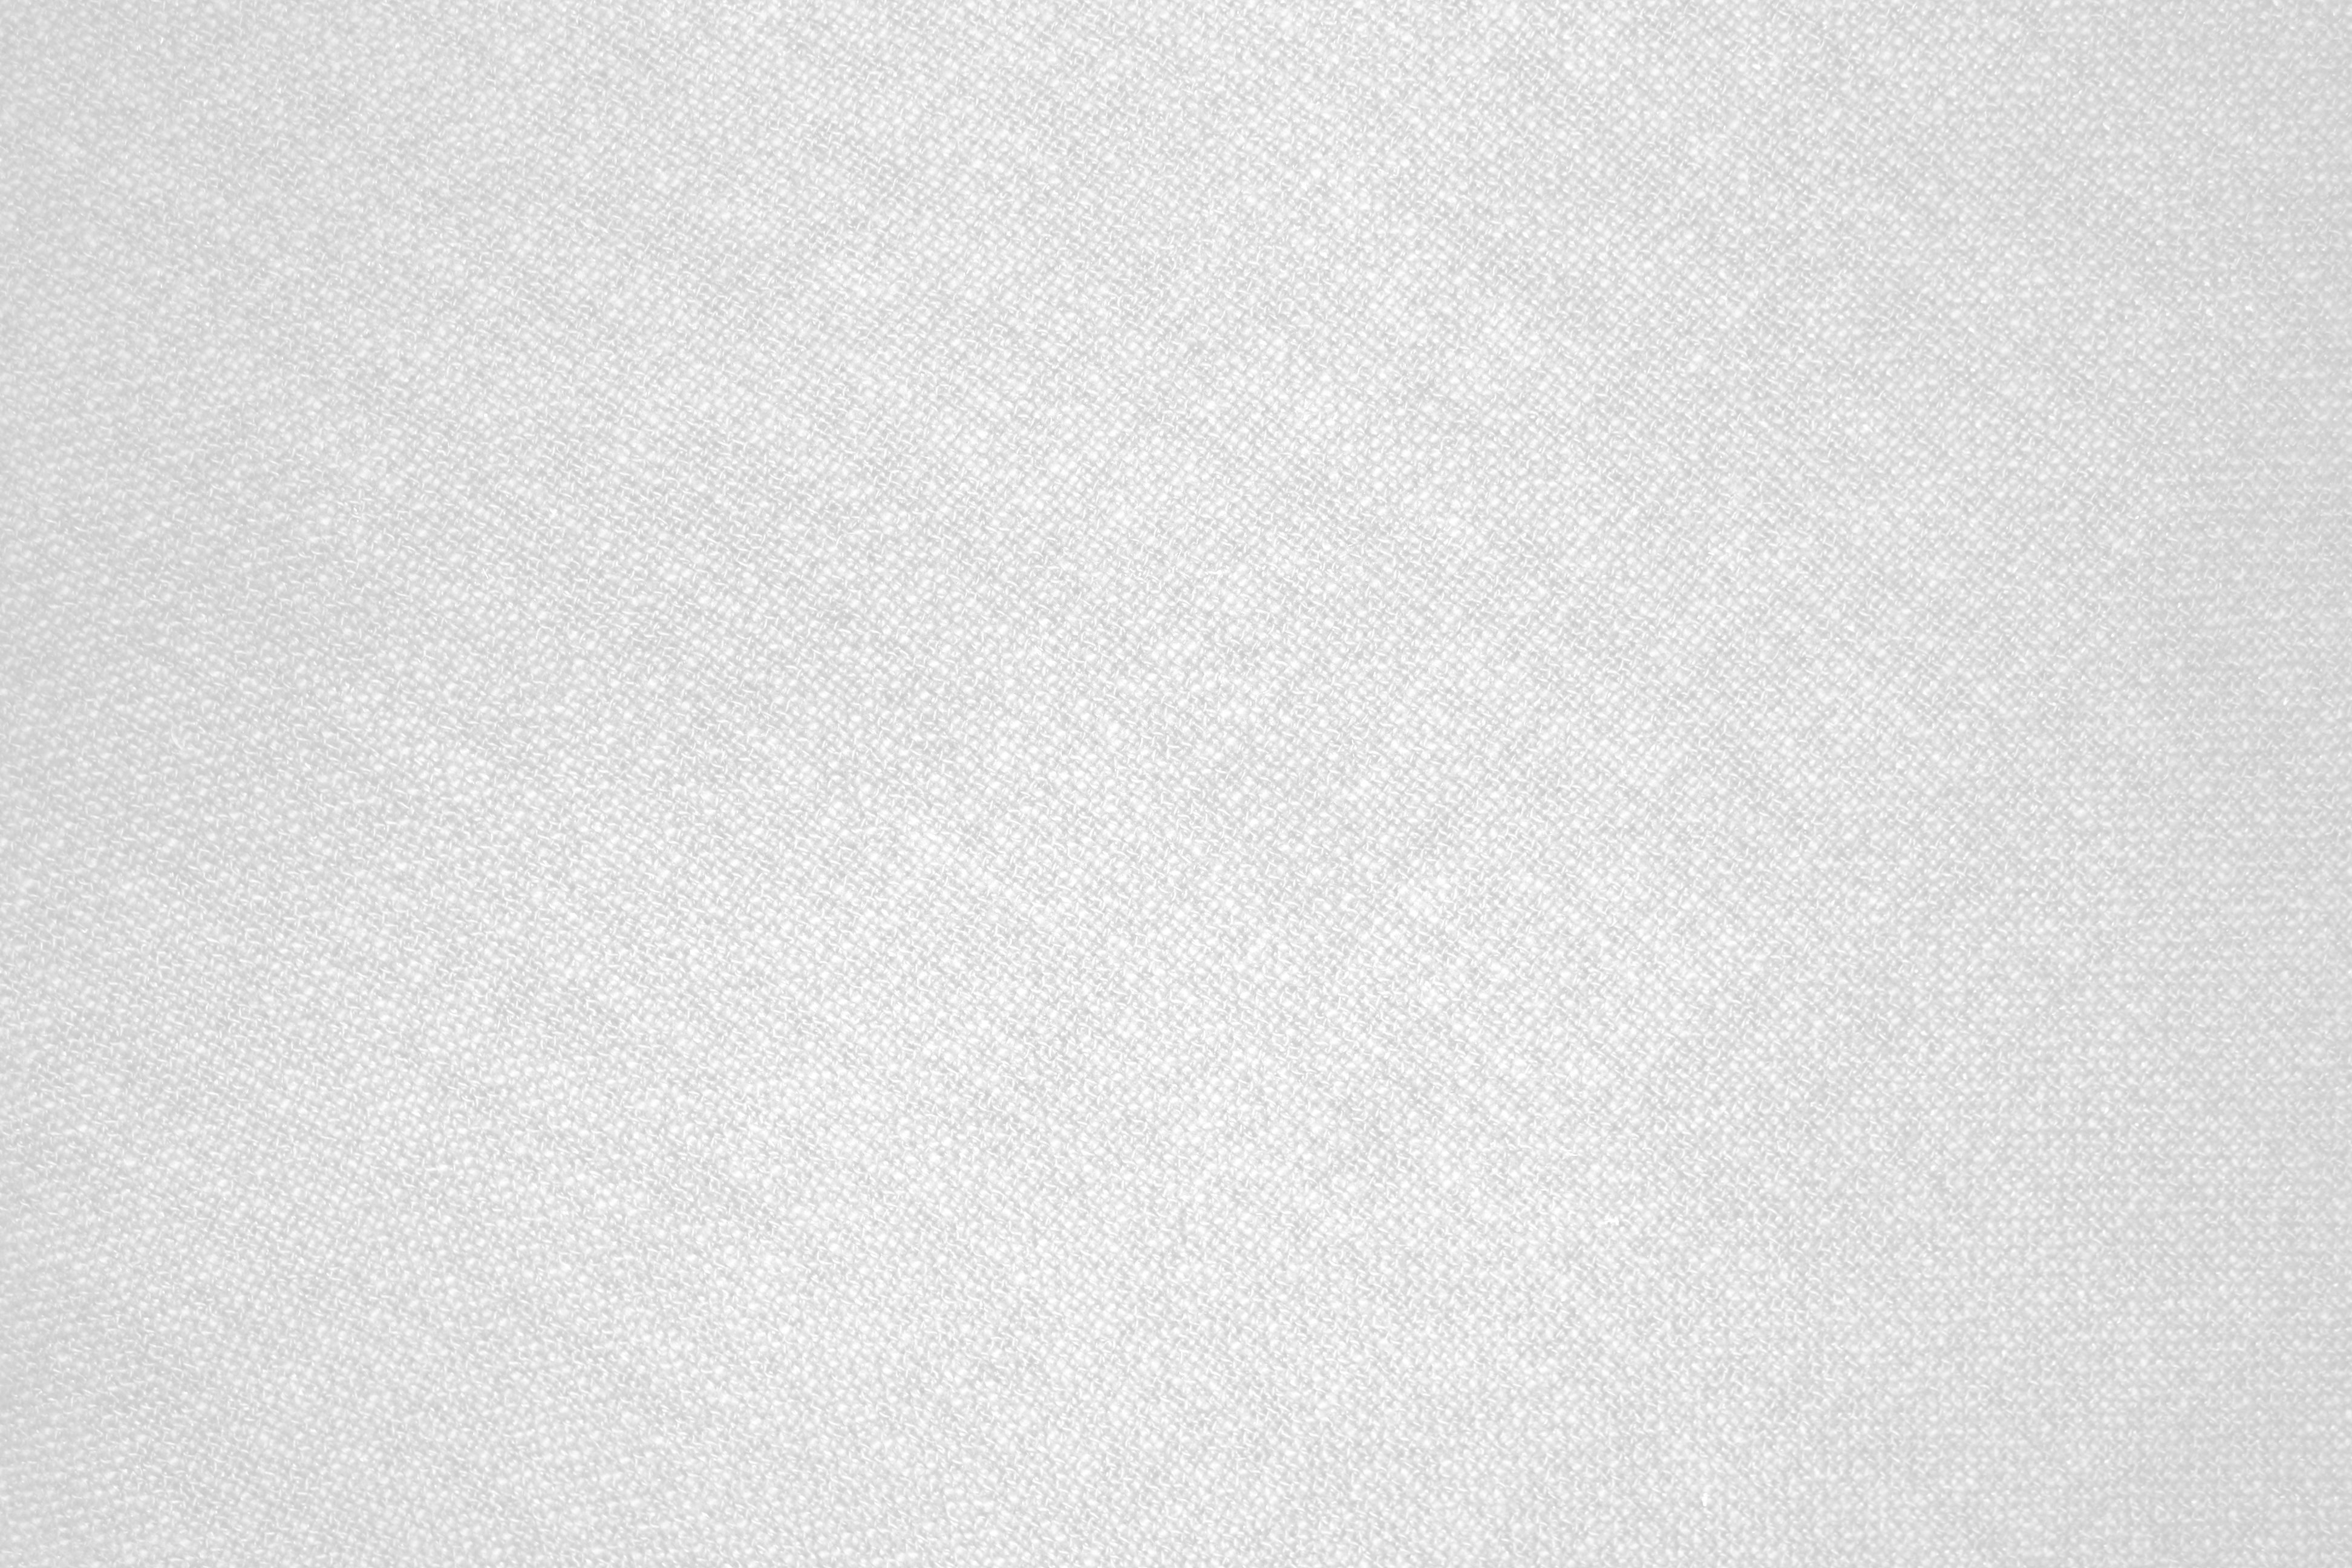 White Fabric Texture Picture Free Photograph Photos Public Domain